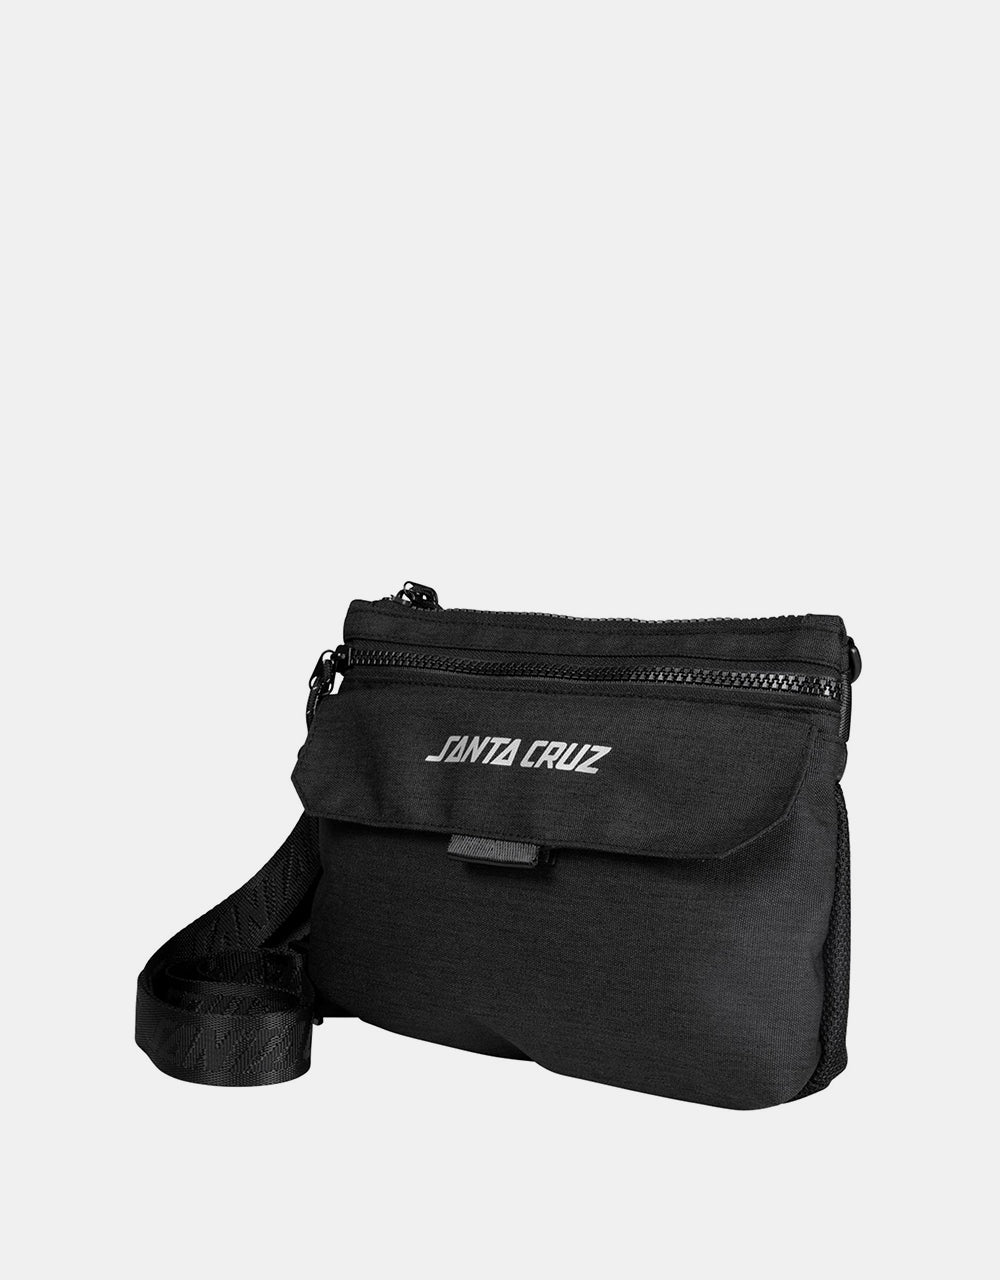 Santa Cruz Tito Side Bag - Black